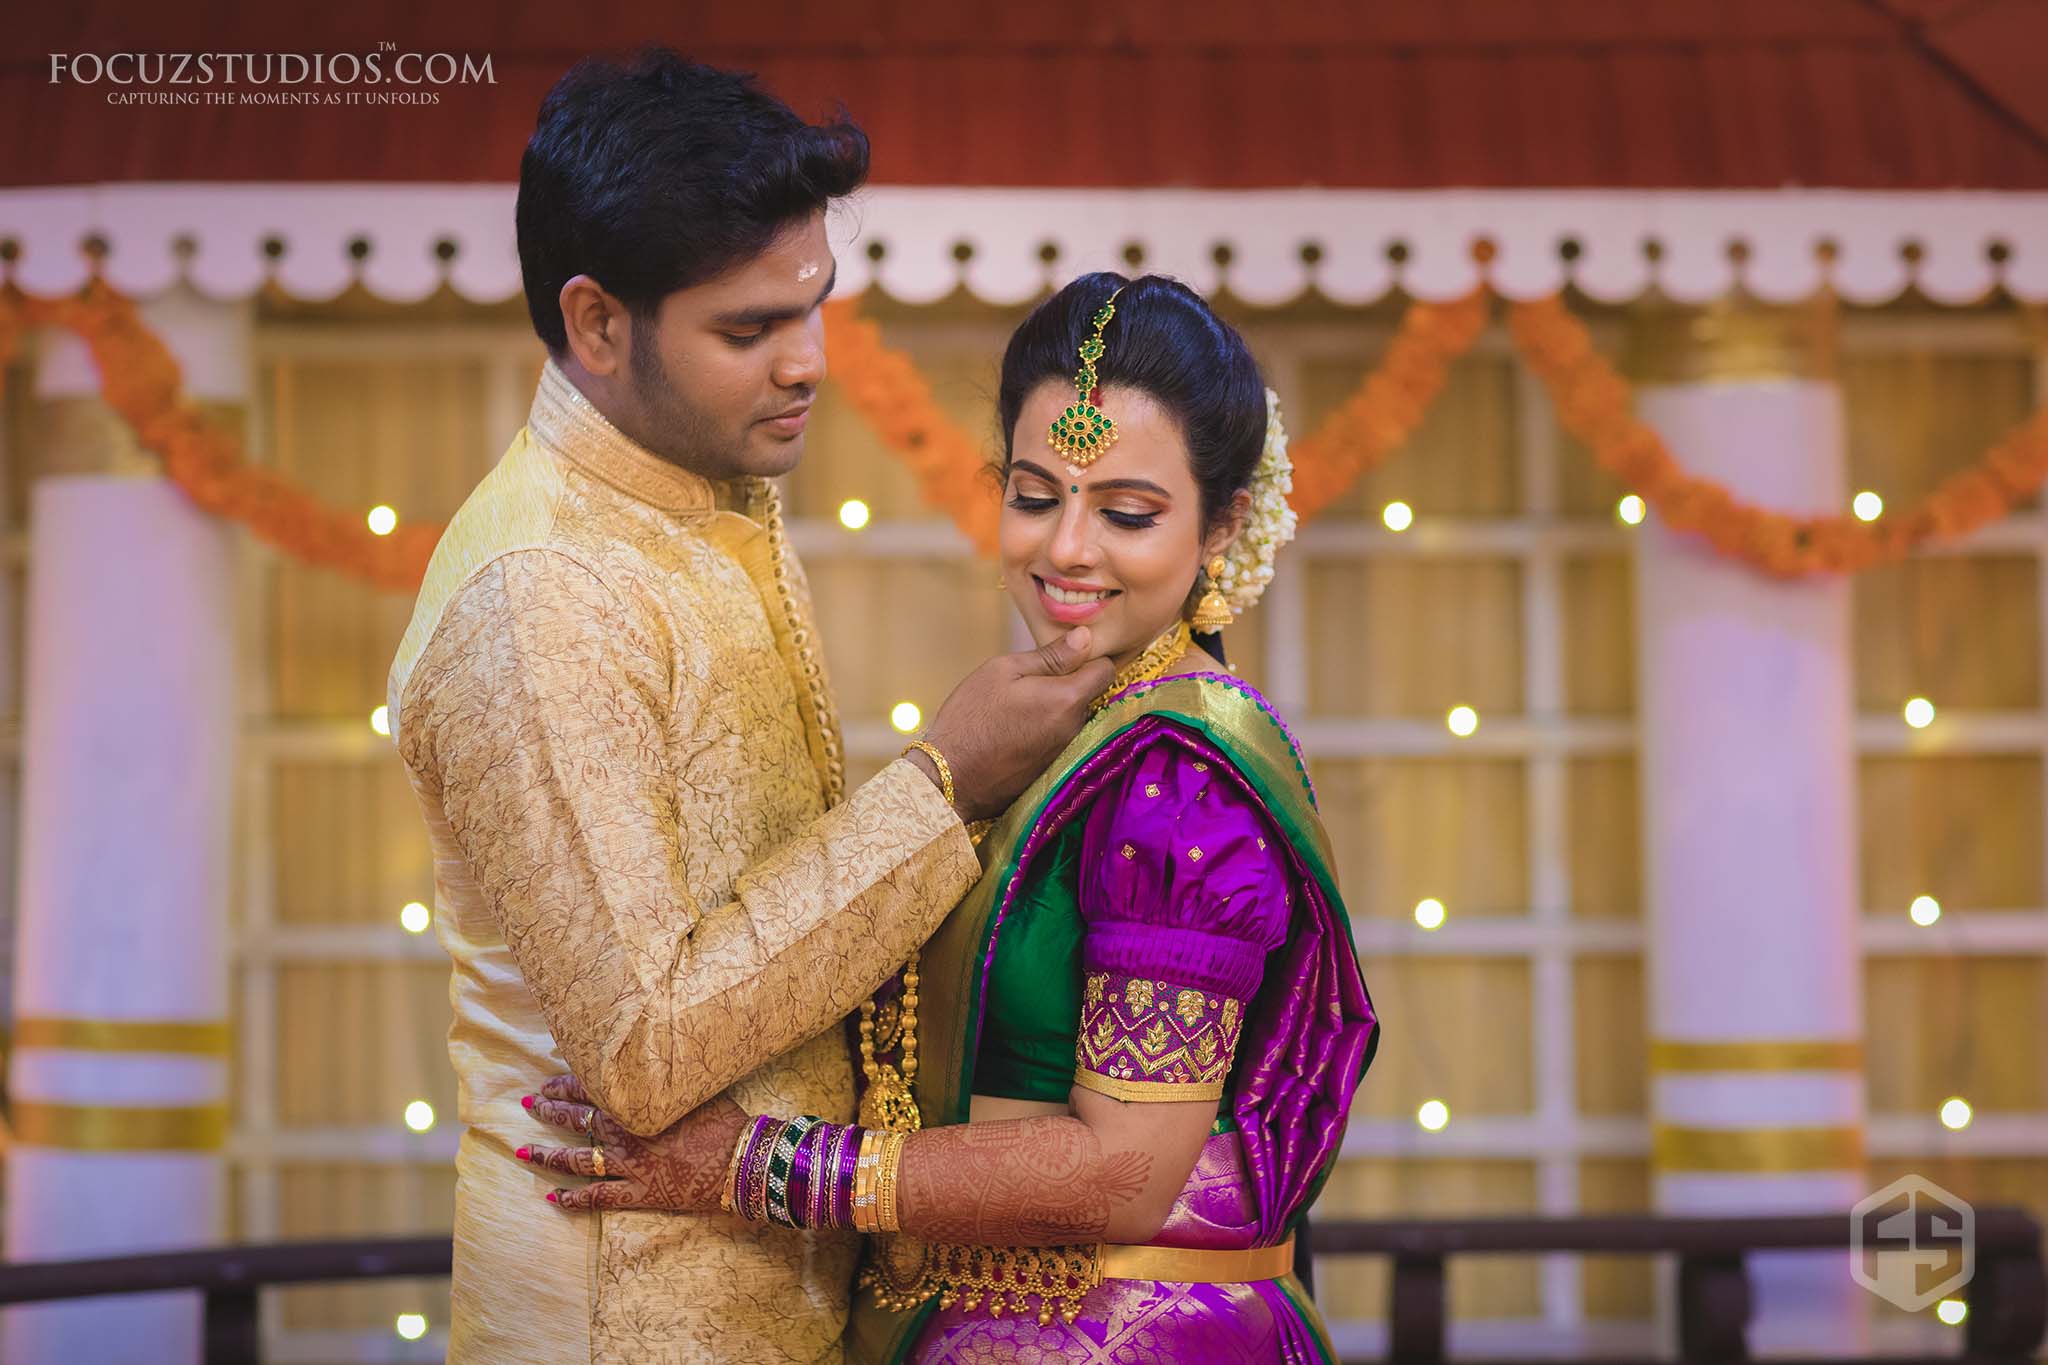 Kerala falling in Love with Tamilnadu – The Fairytale Wedding